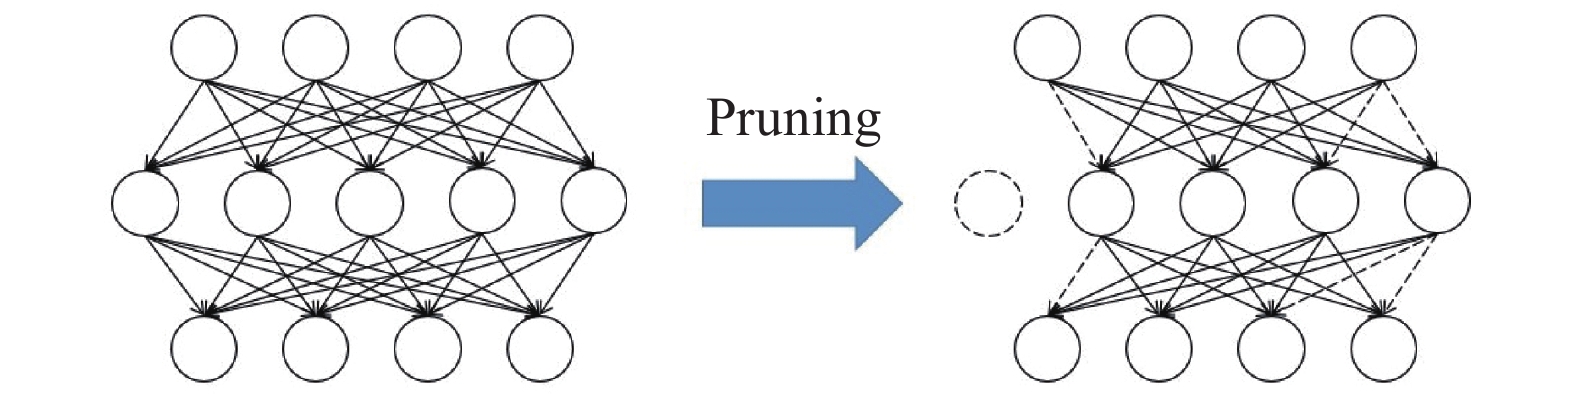 Schematic of network pruning